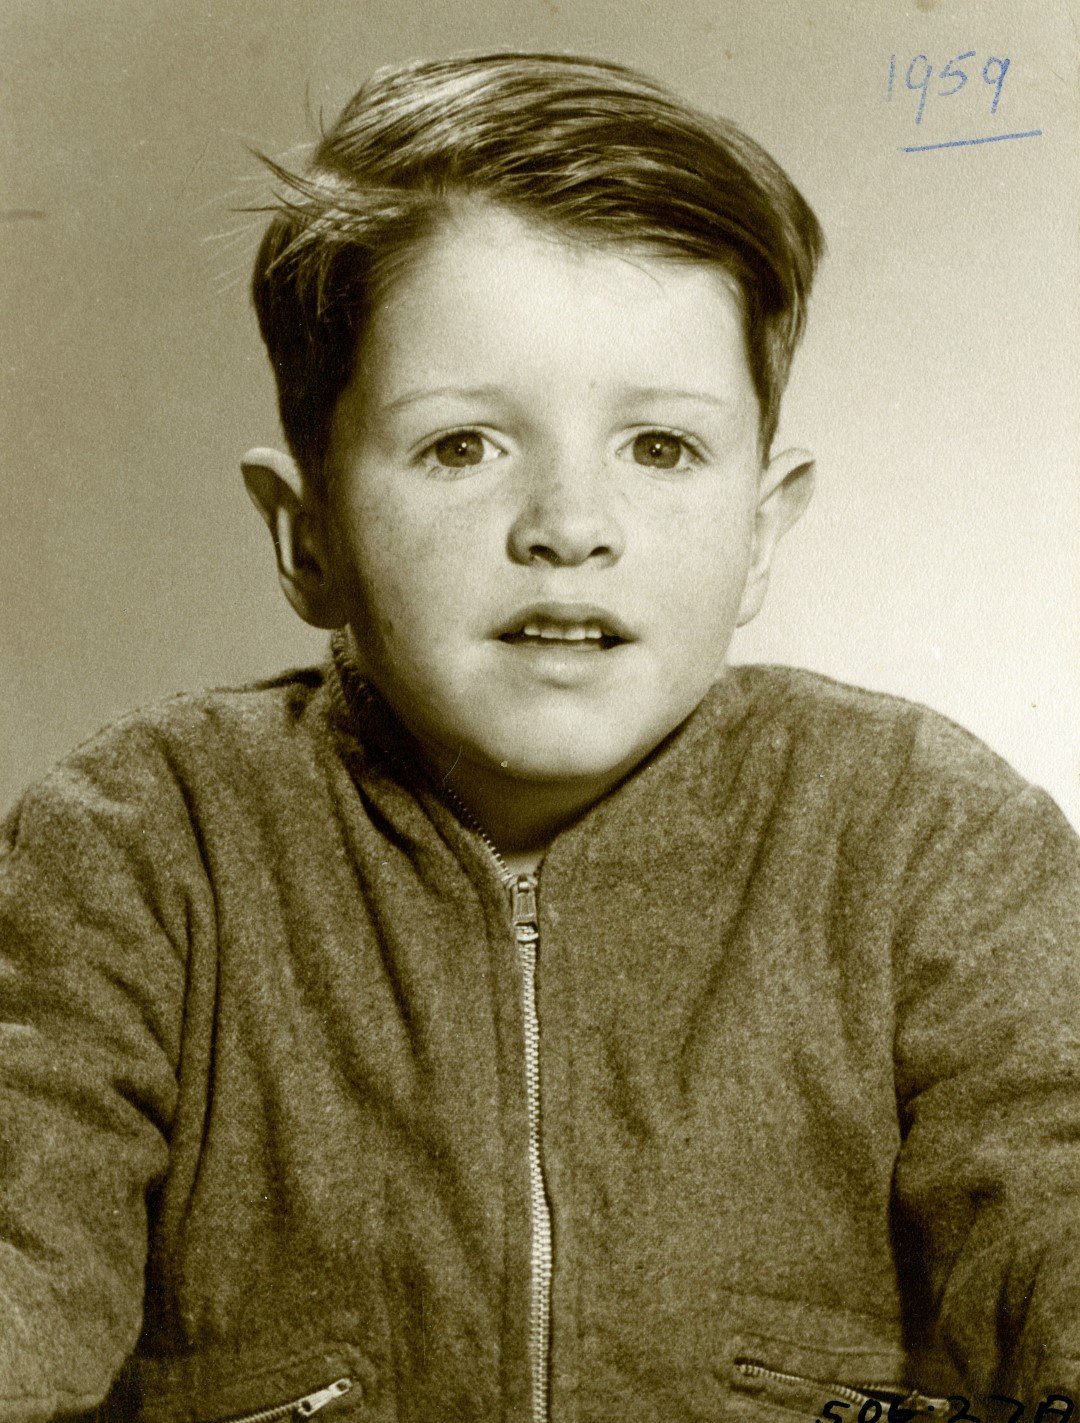 Grant 1959